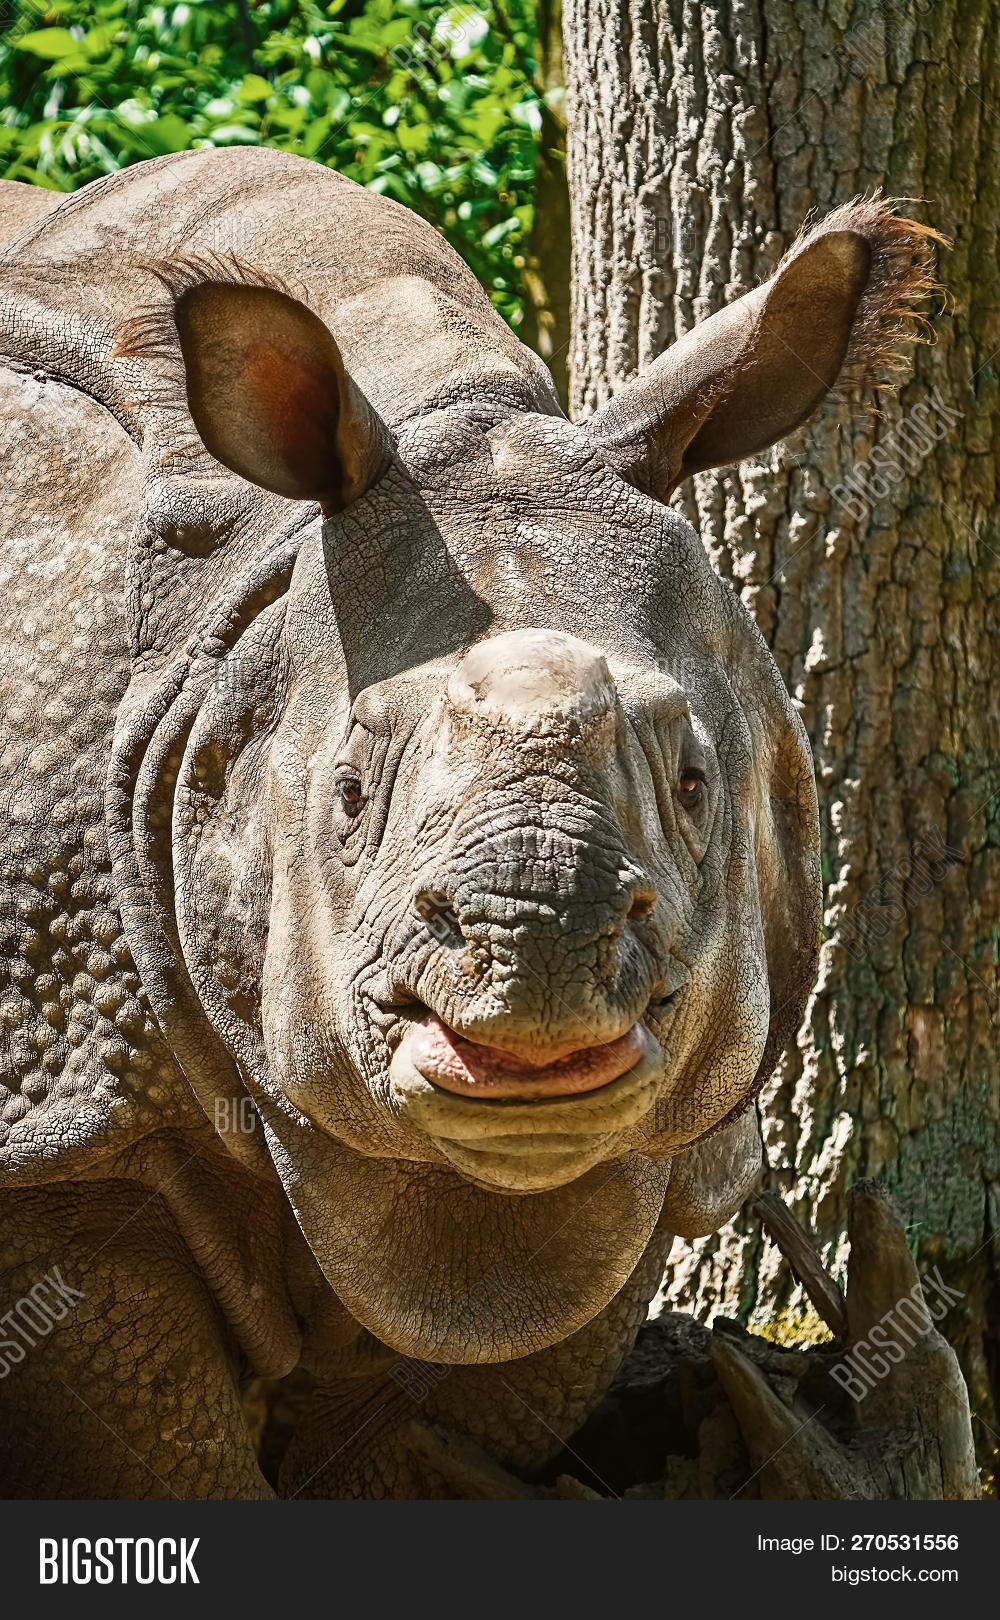 download rhinoceros free trial